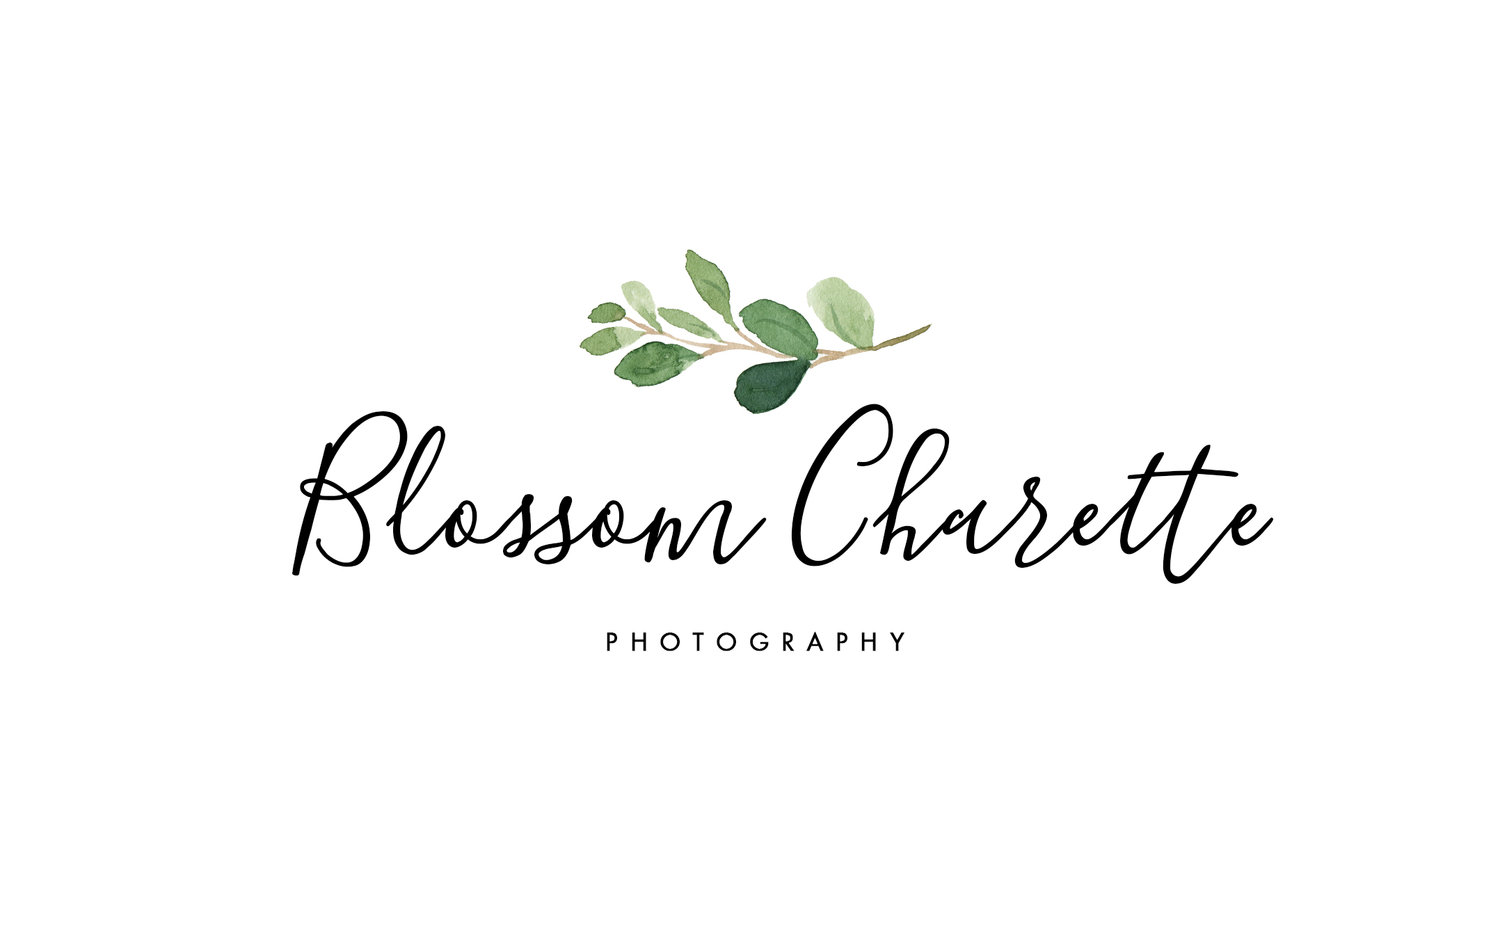 Blossom Charette Photography